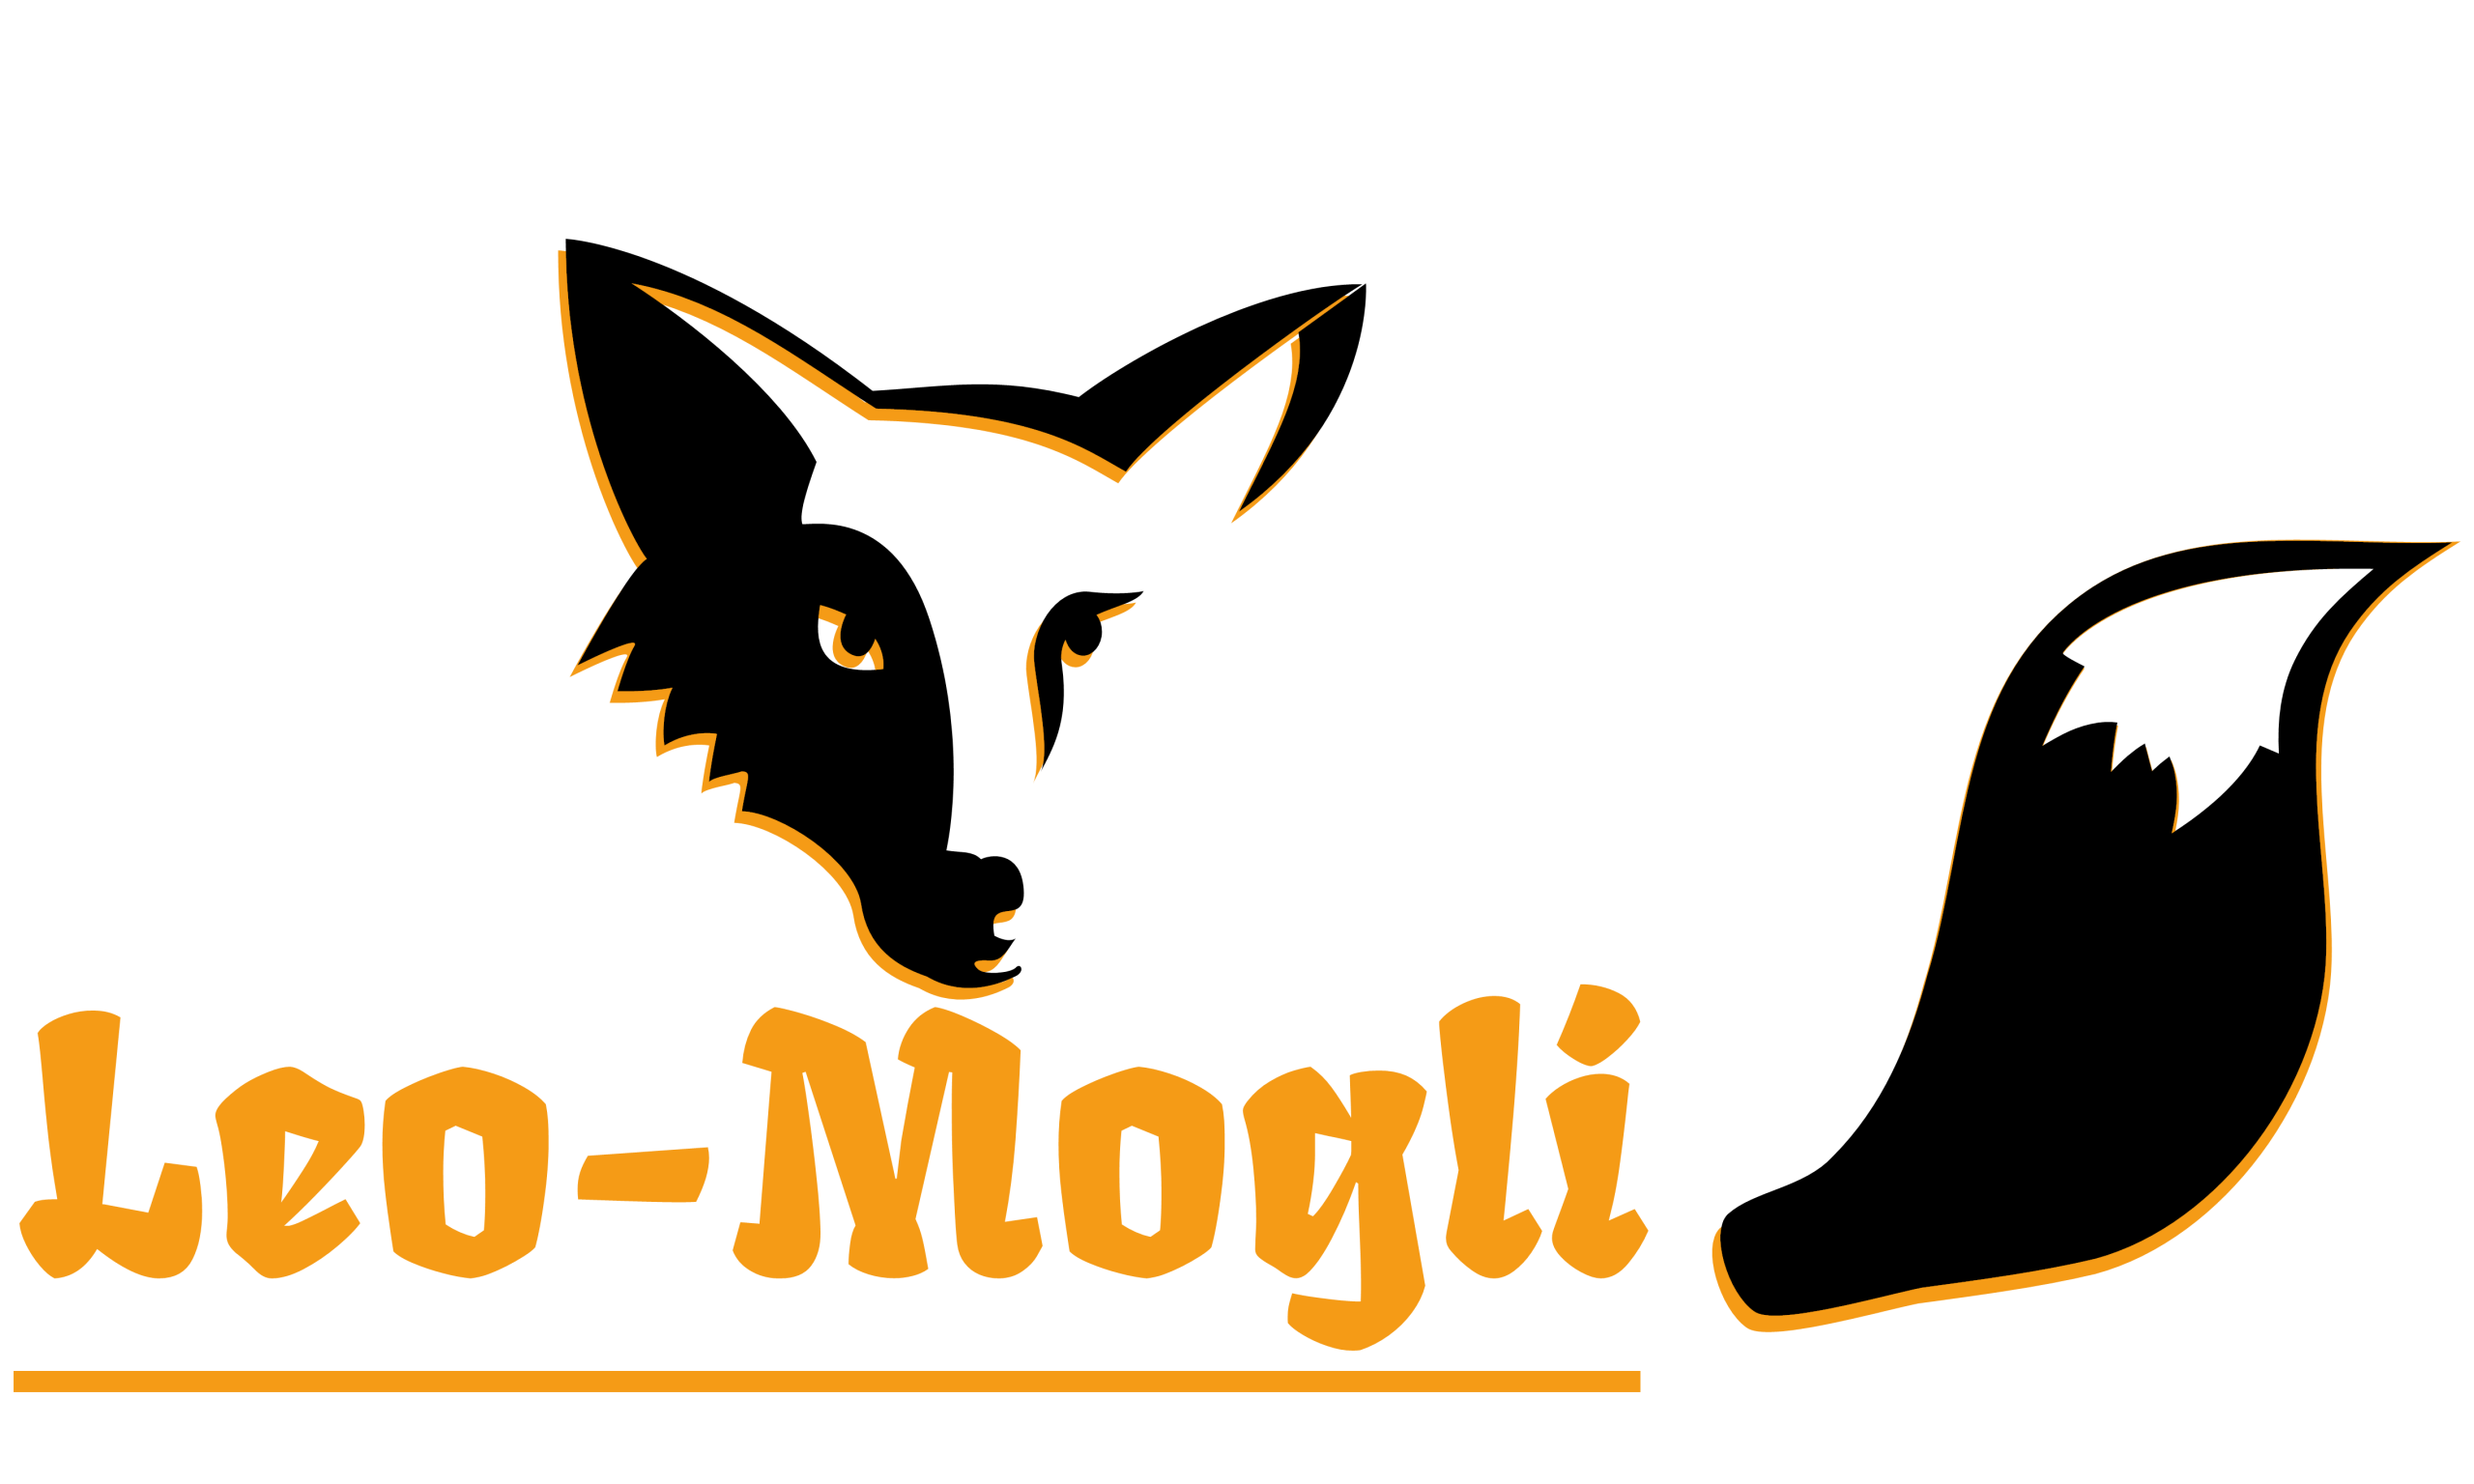 Leo-Mogli